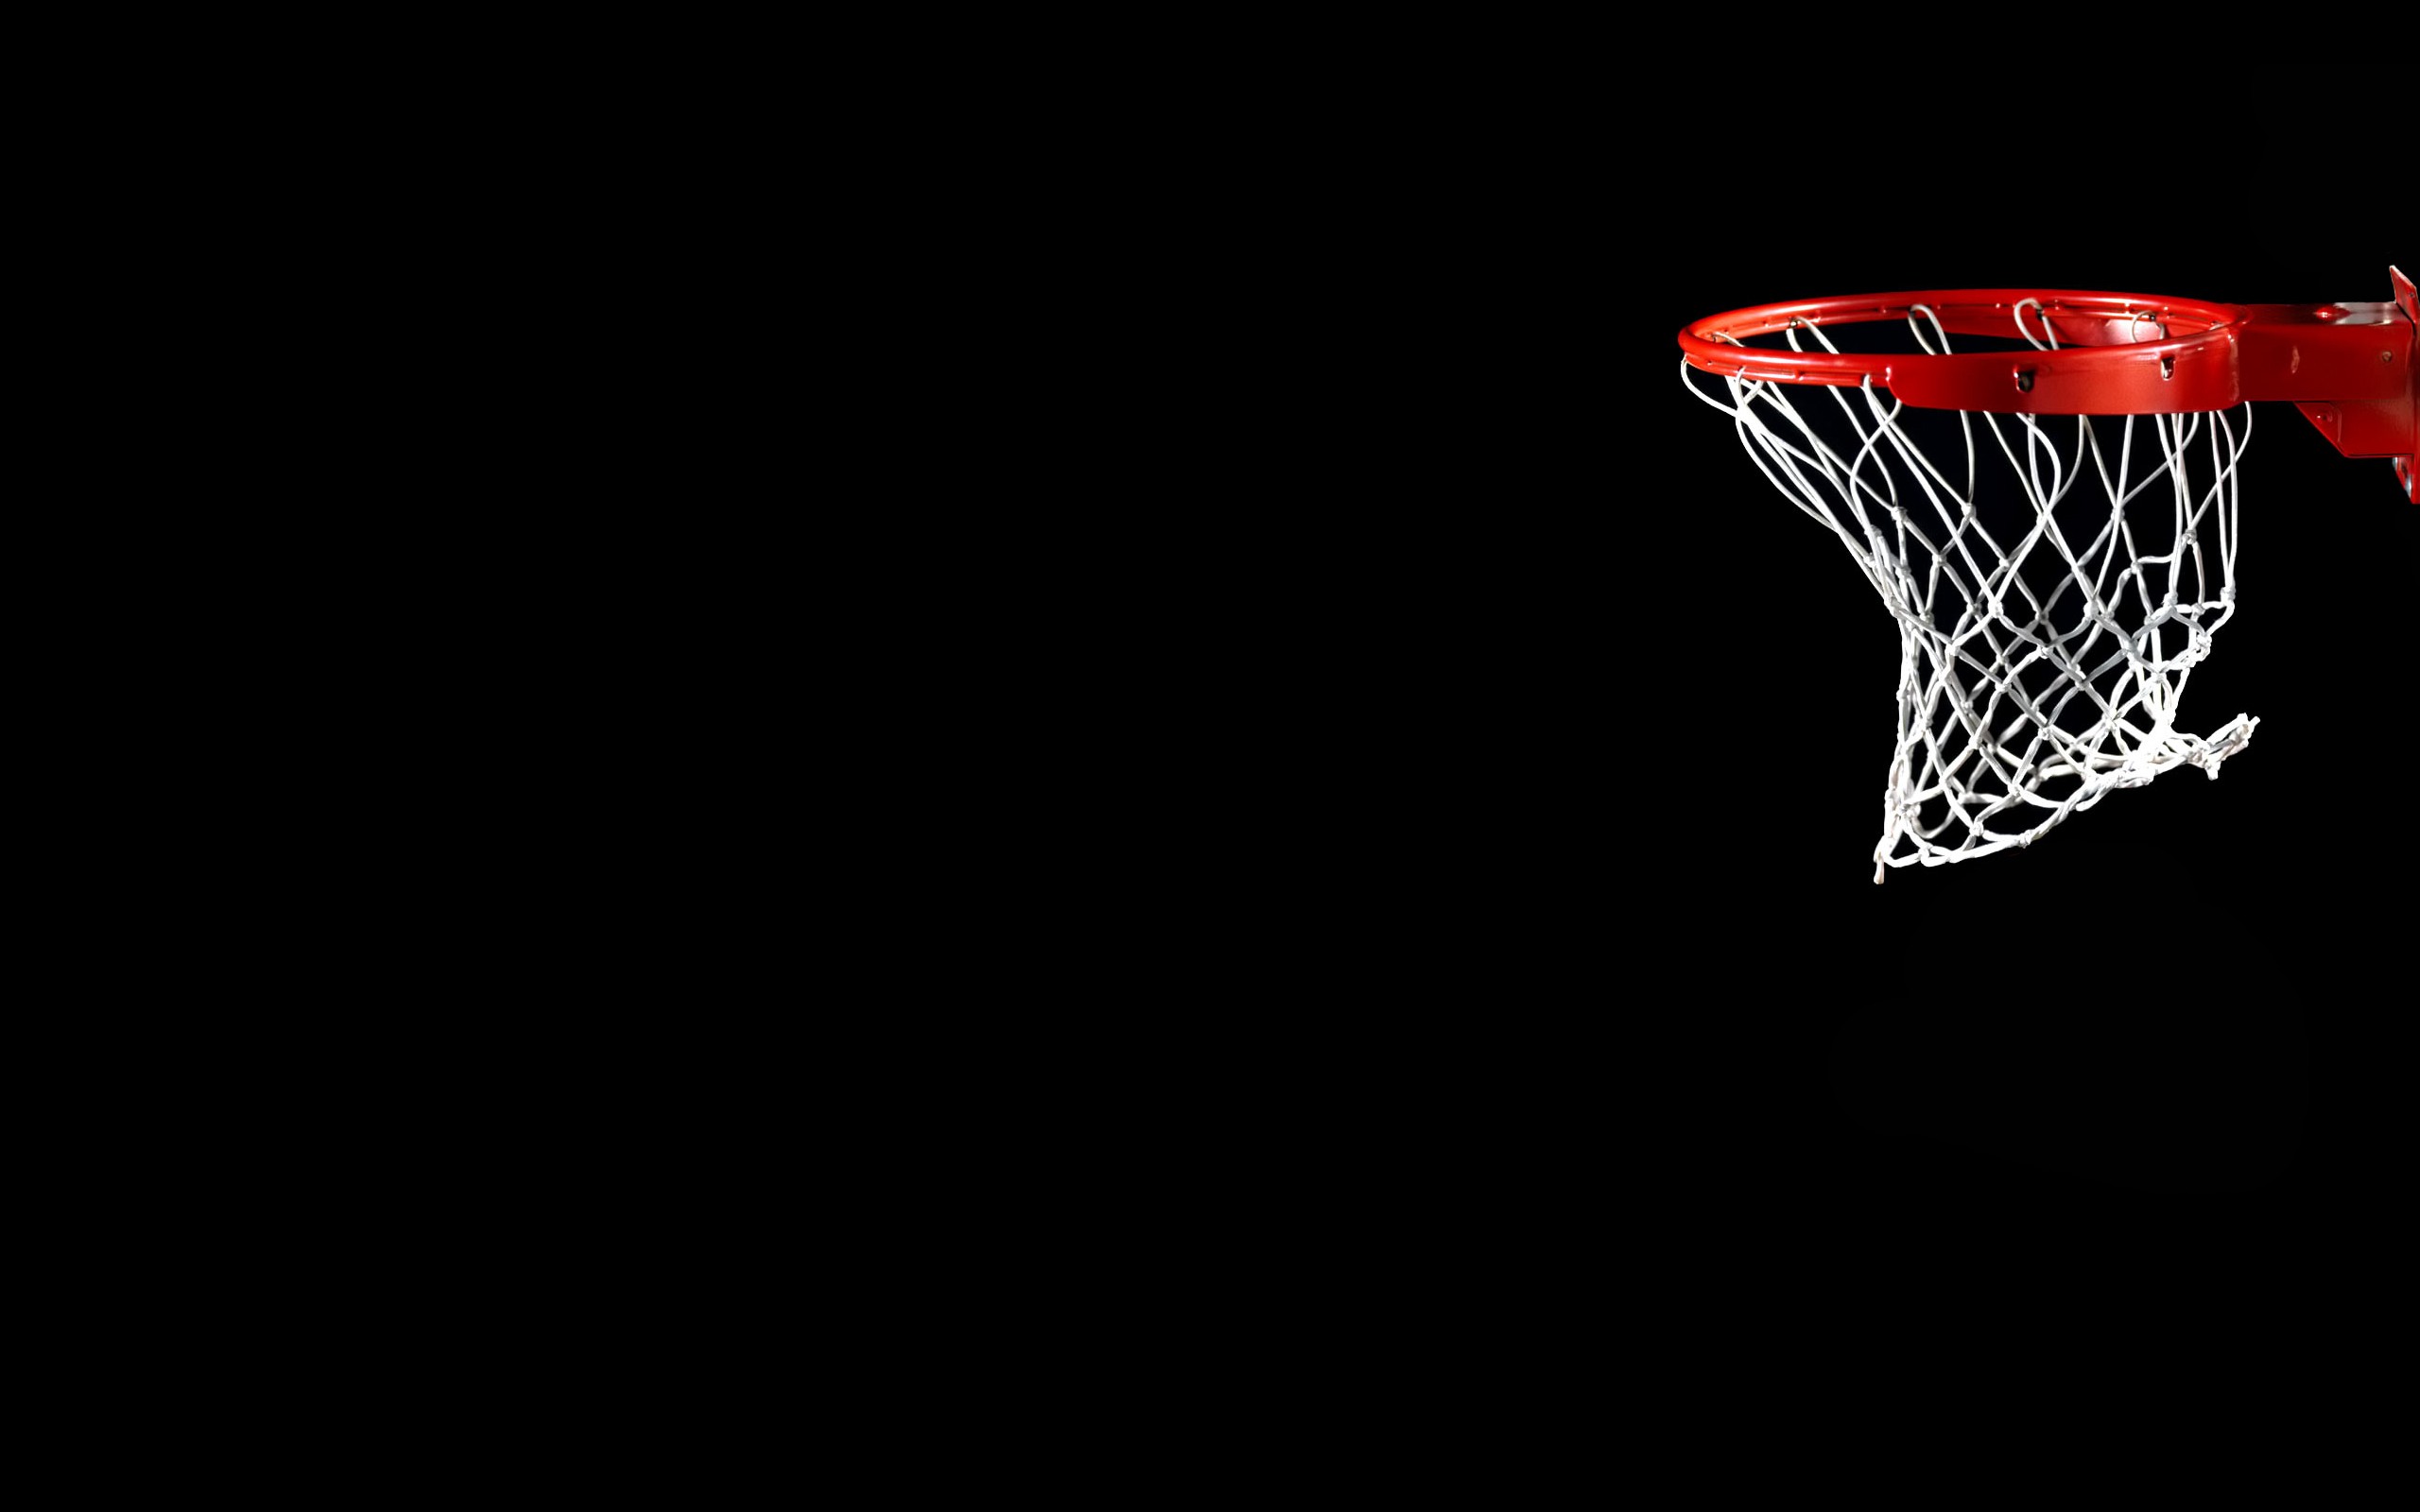 Wallpaper Basketball Sports Background Image